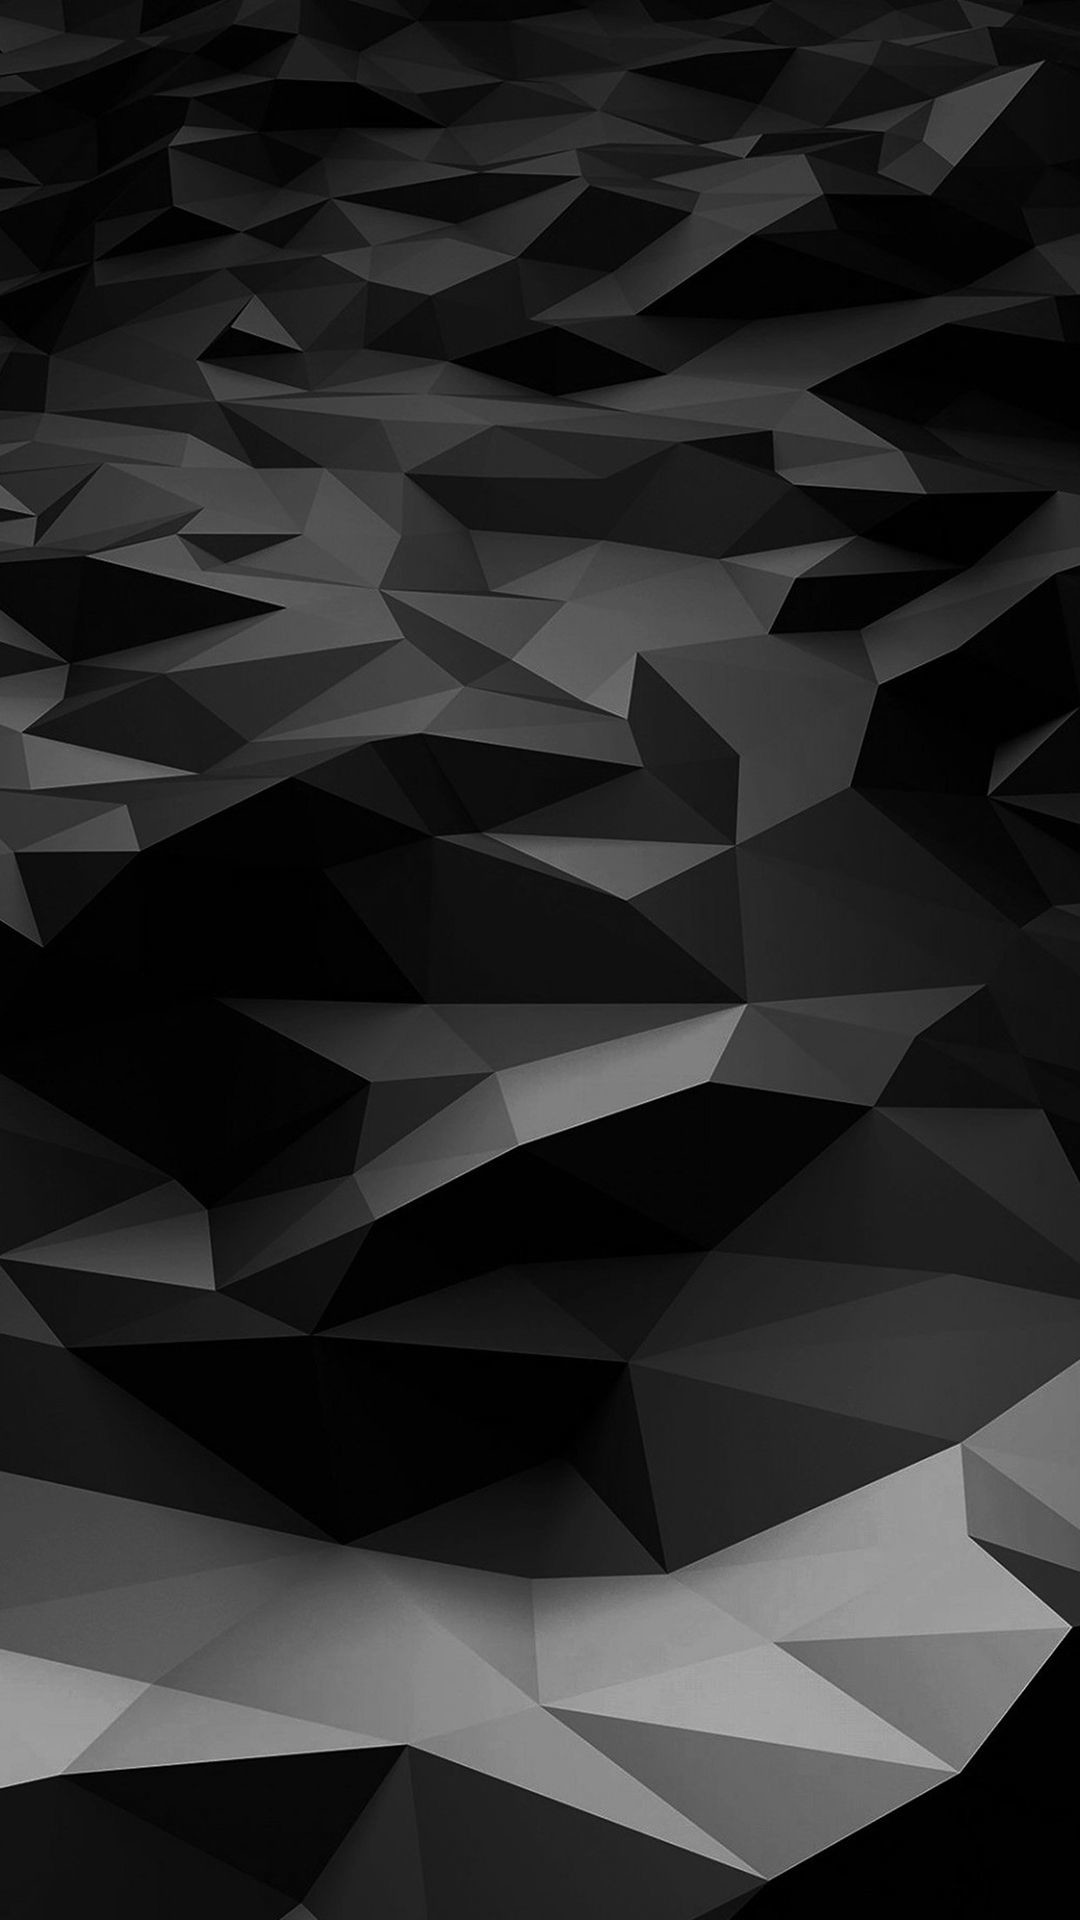 Low poly art dark black pattern iphone 6 wallpapers download